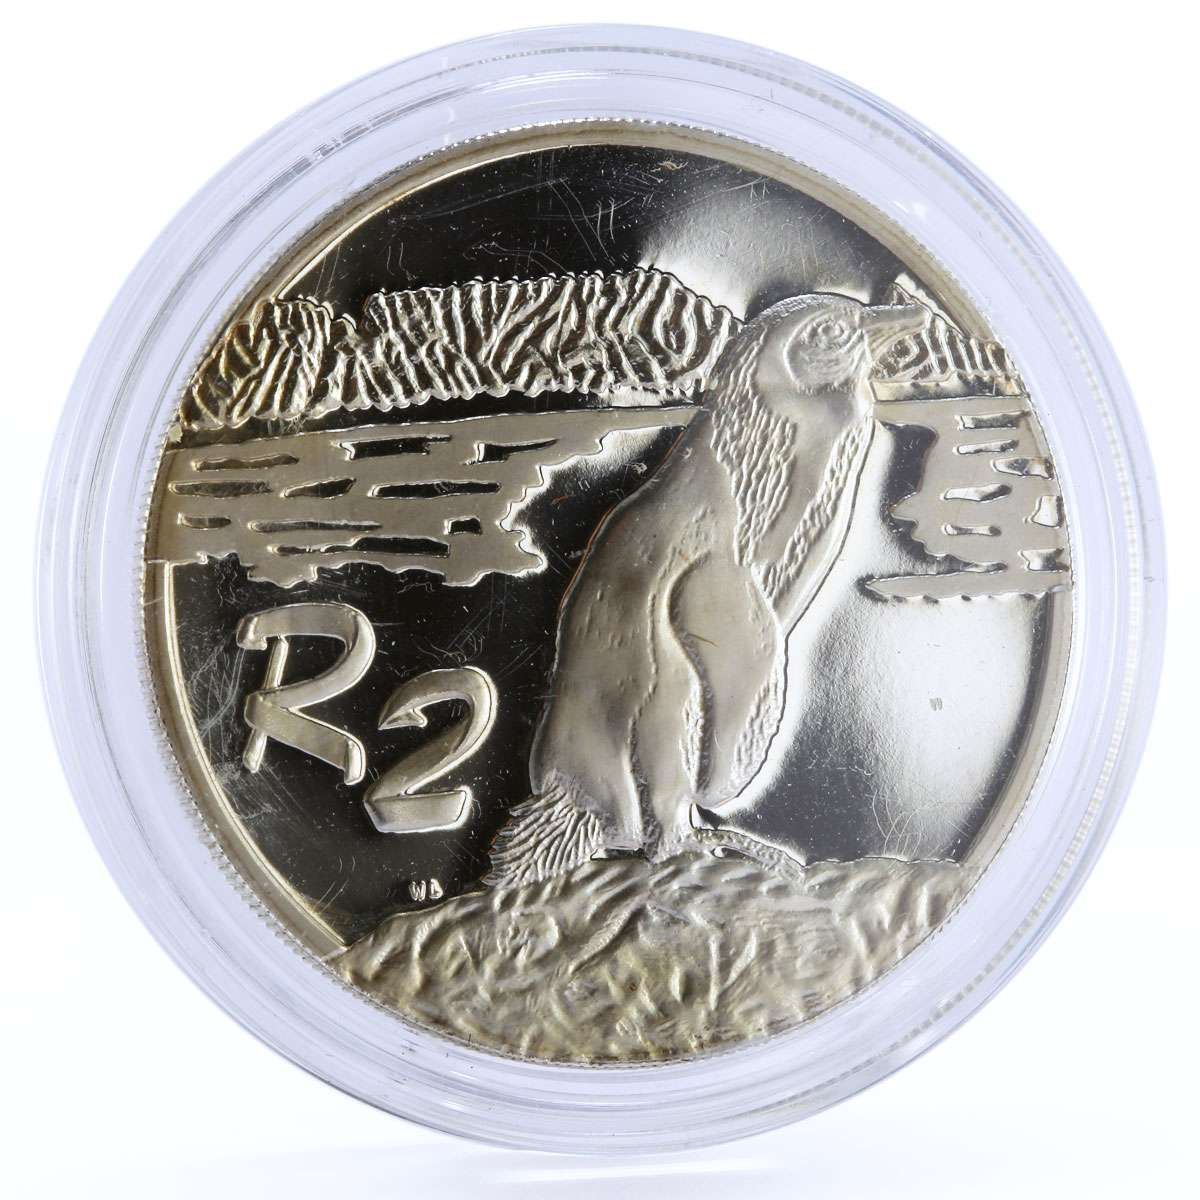 South Africa 2 rand Endangered Widlife Jackass Penguin Fauna silver coin 1998